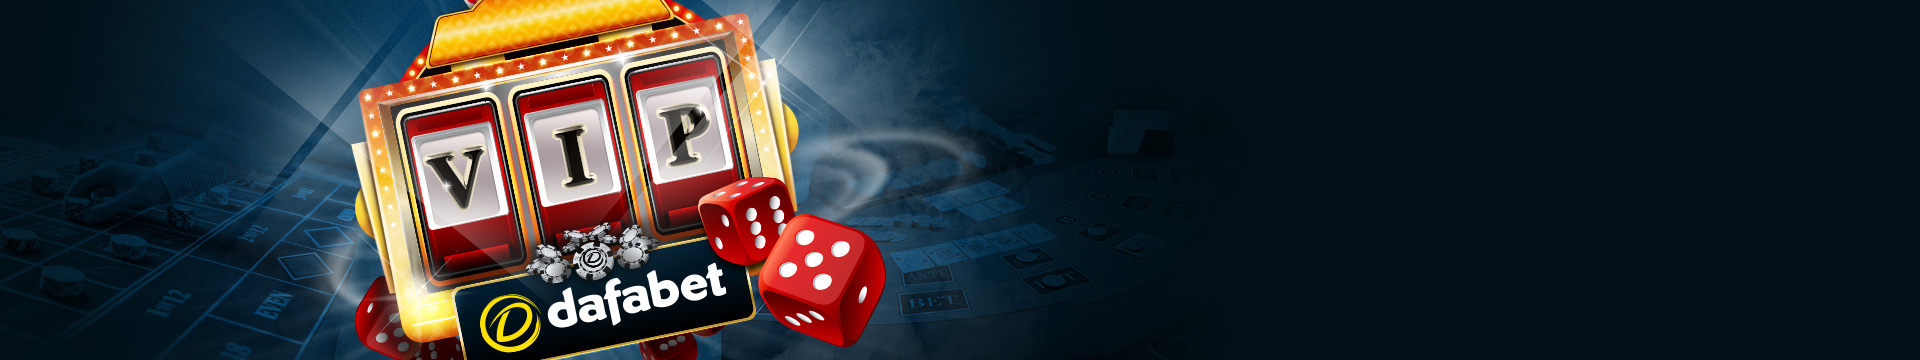 Online Poker Promotion: Poker Prosperity VIP Club